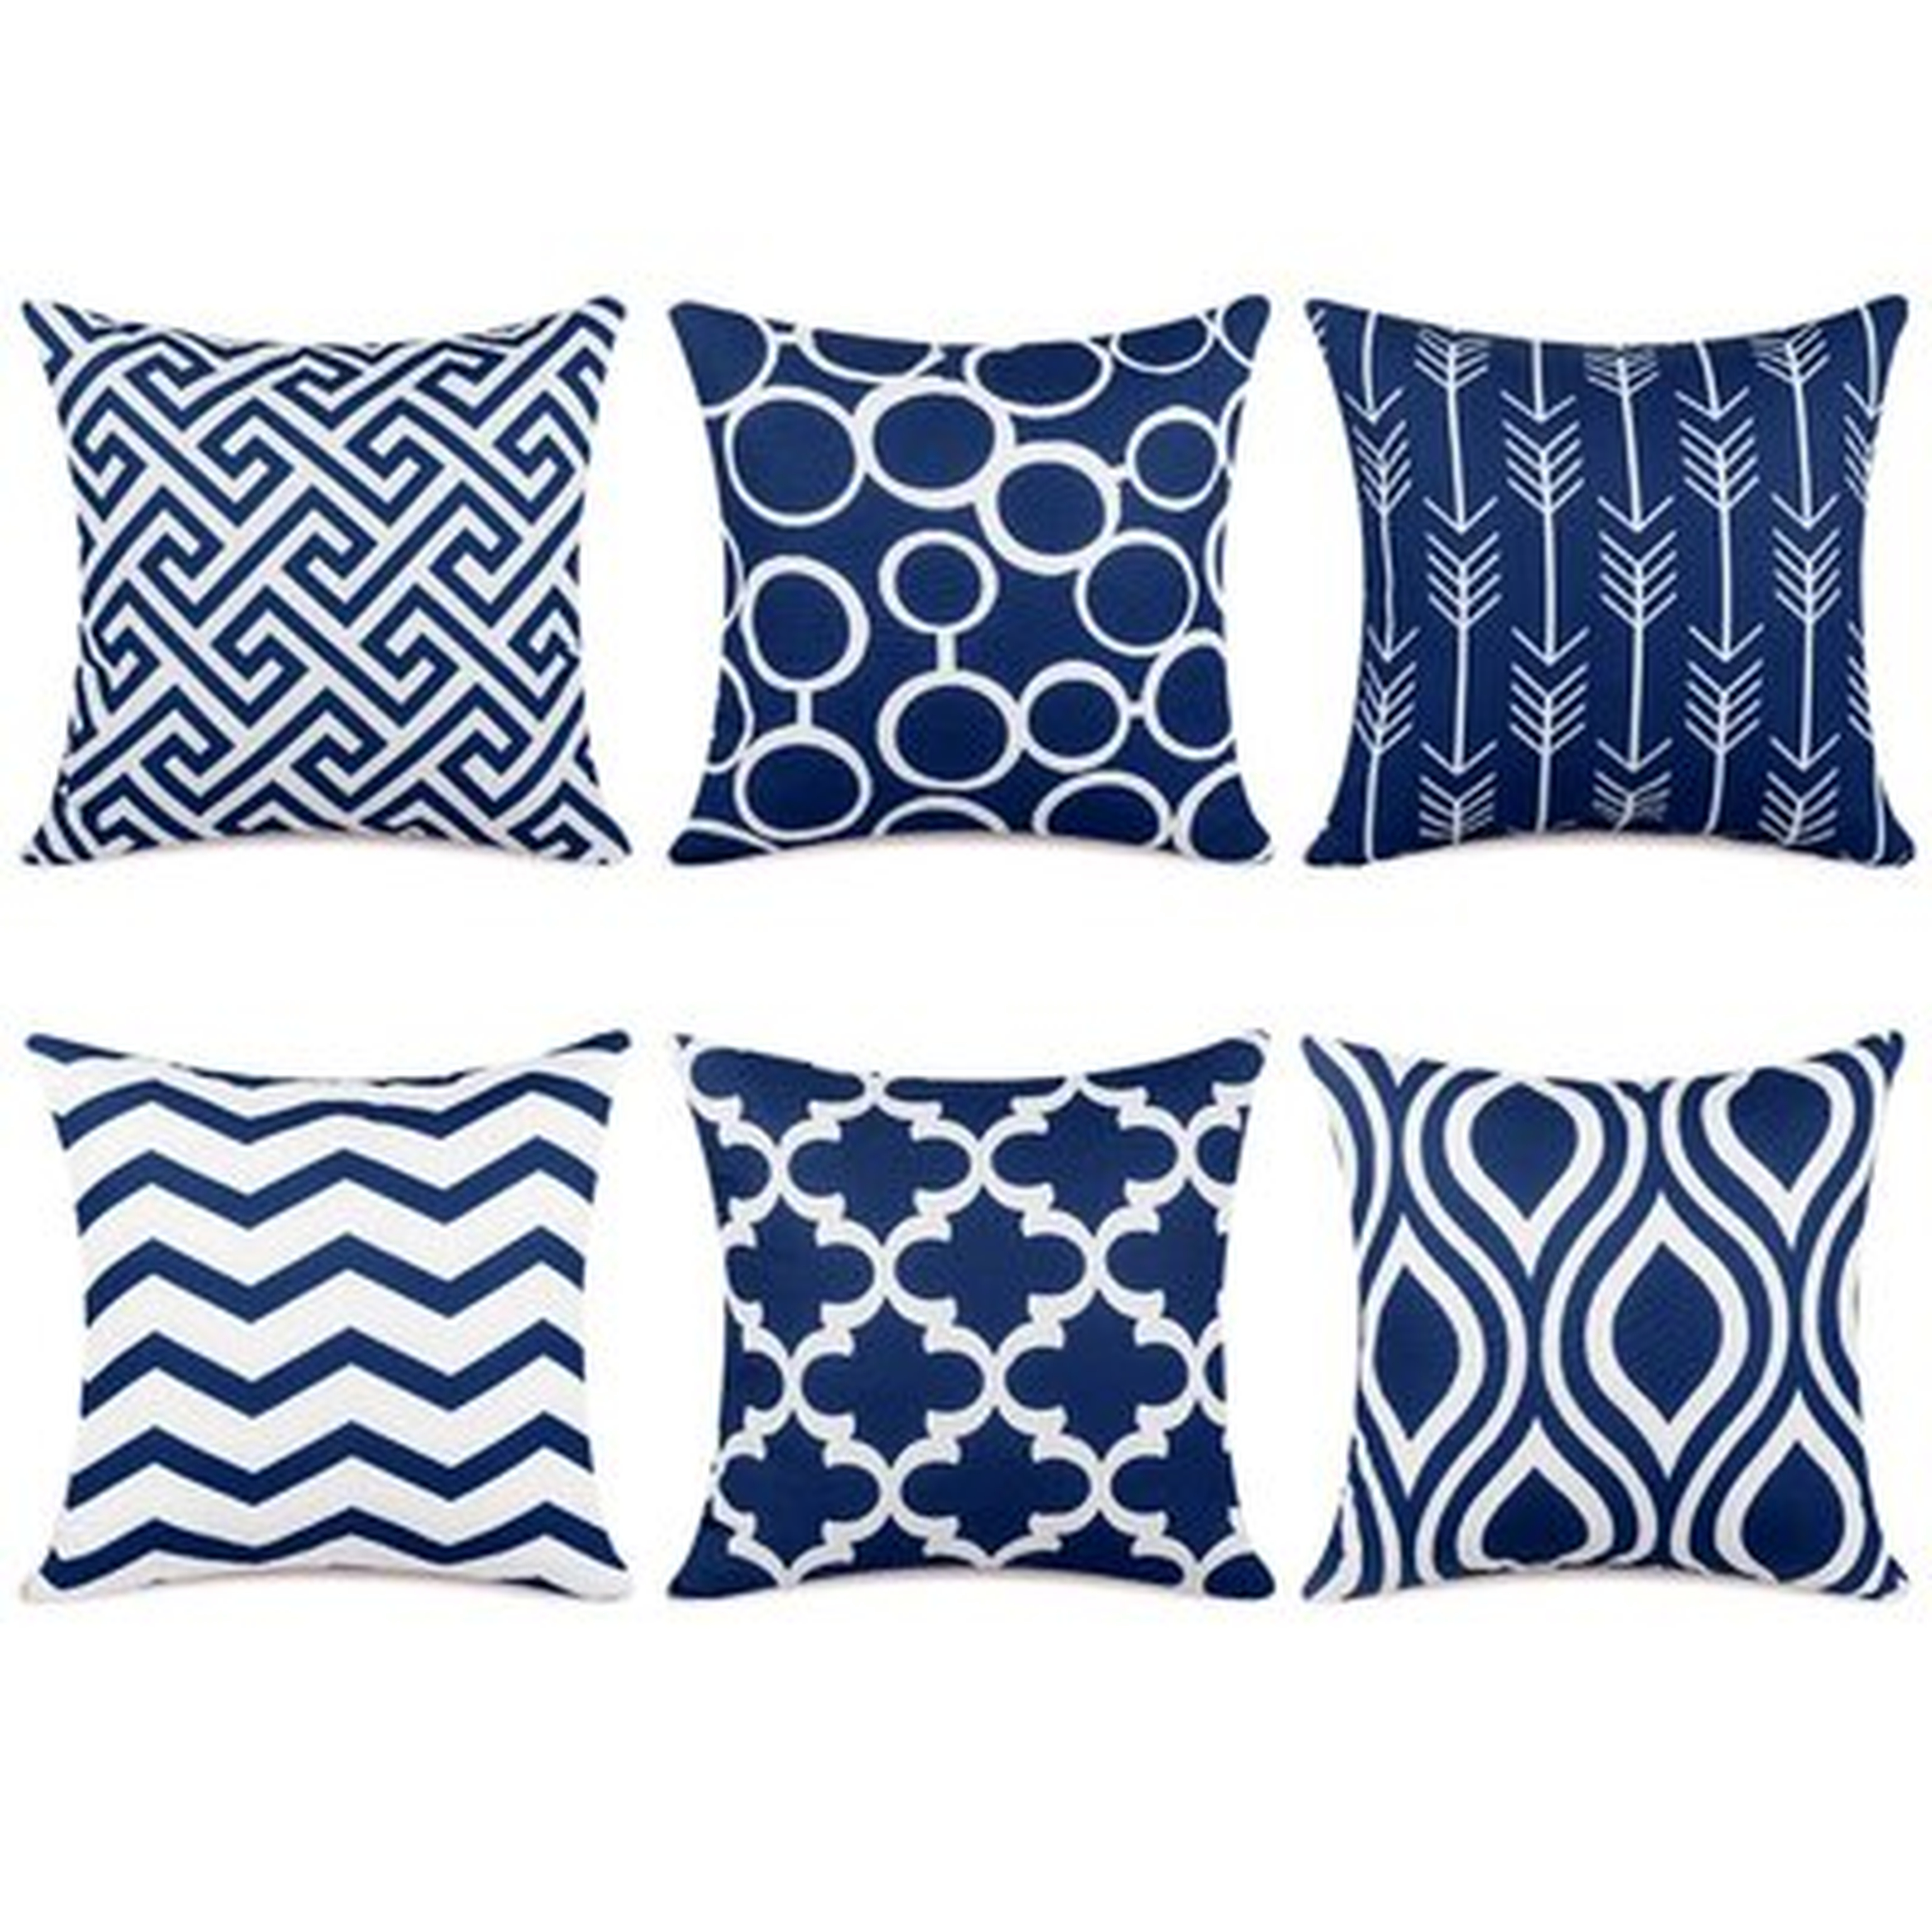 Topfinel Durable Canvas Square Decorative Throw Pillows Cushion Covers For Sofa Indoor/Outdoor - Wayfair